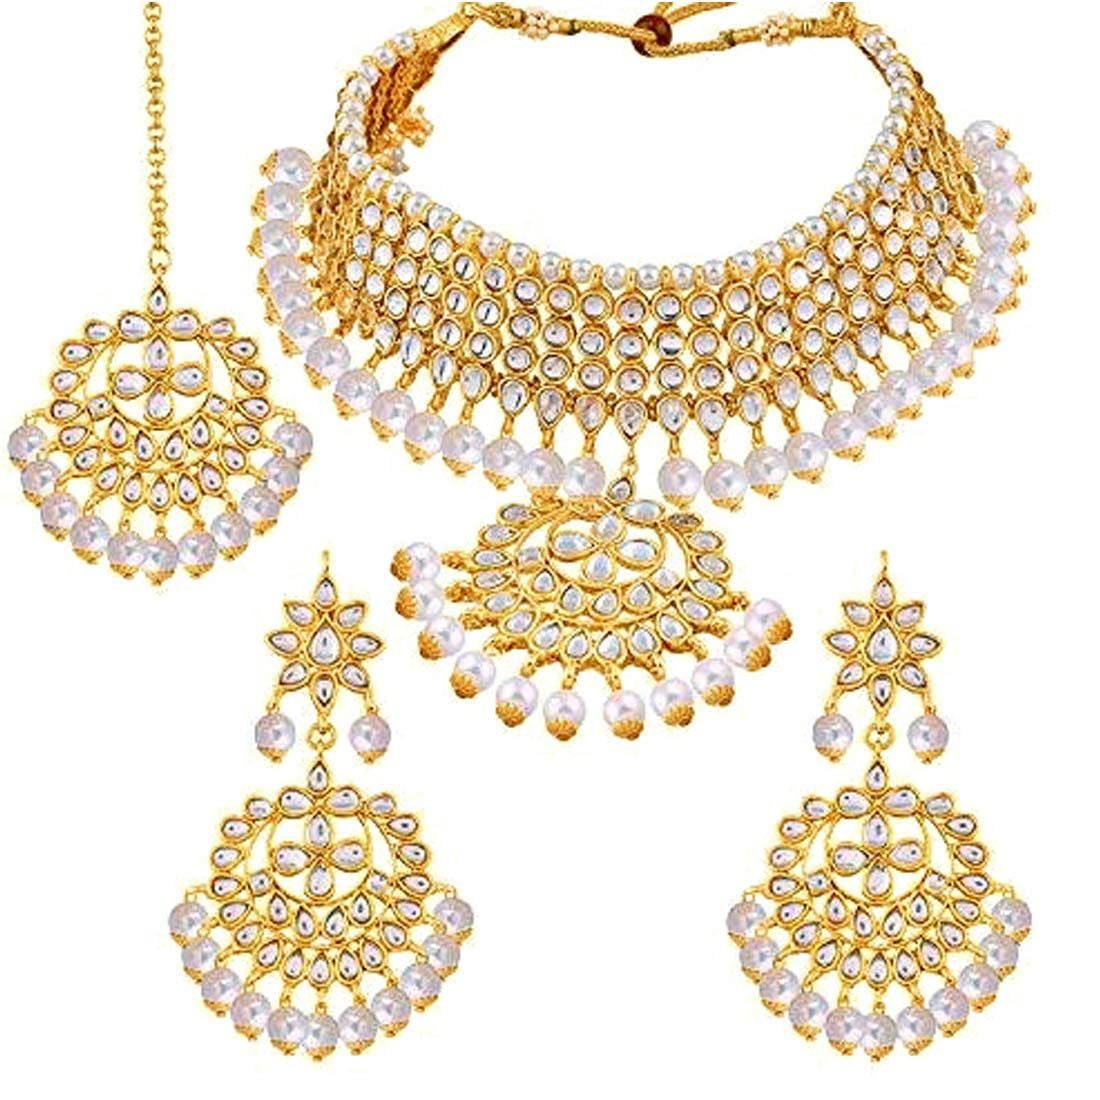 Indian Fashion Jewelry New Arrival White Kundan Wedding Earring Tikka Set Women 